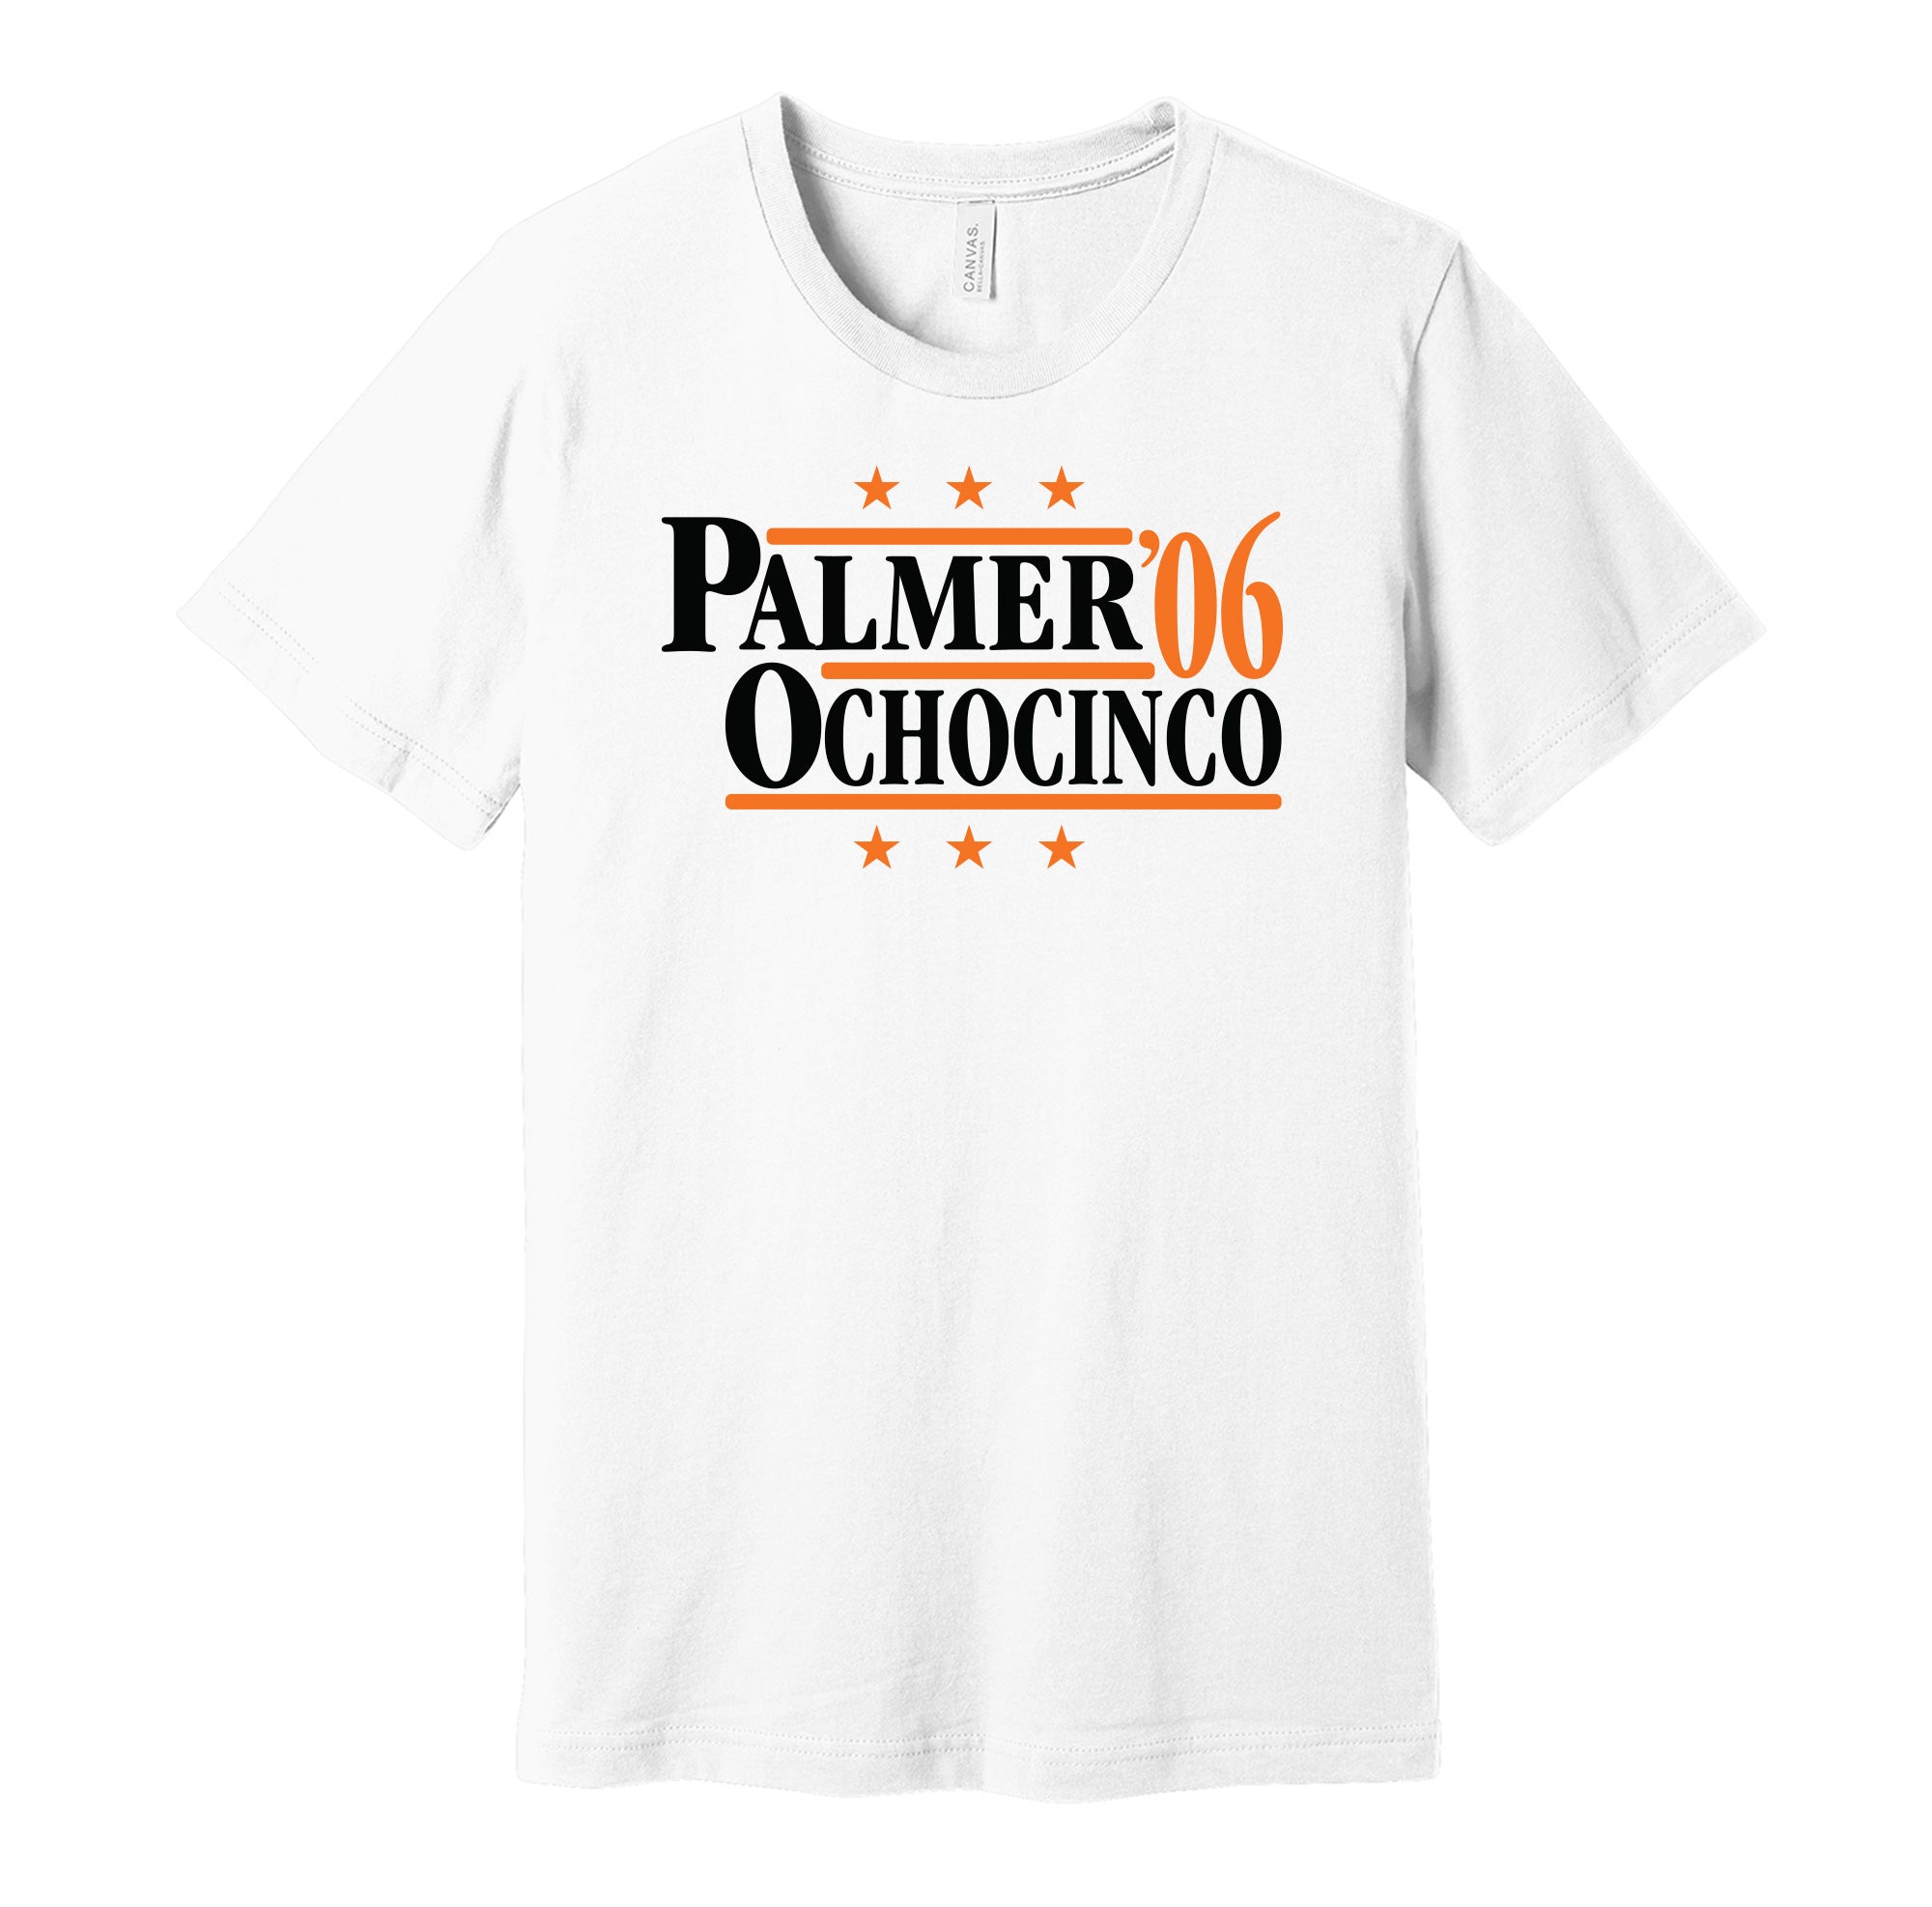 Palmer & Ochocinco '06 - Cincinnati Football Legends Political Campaign Parody T-Shirt - Hyper Than Hype Shirts 3XL / White Shirt